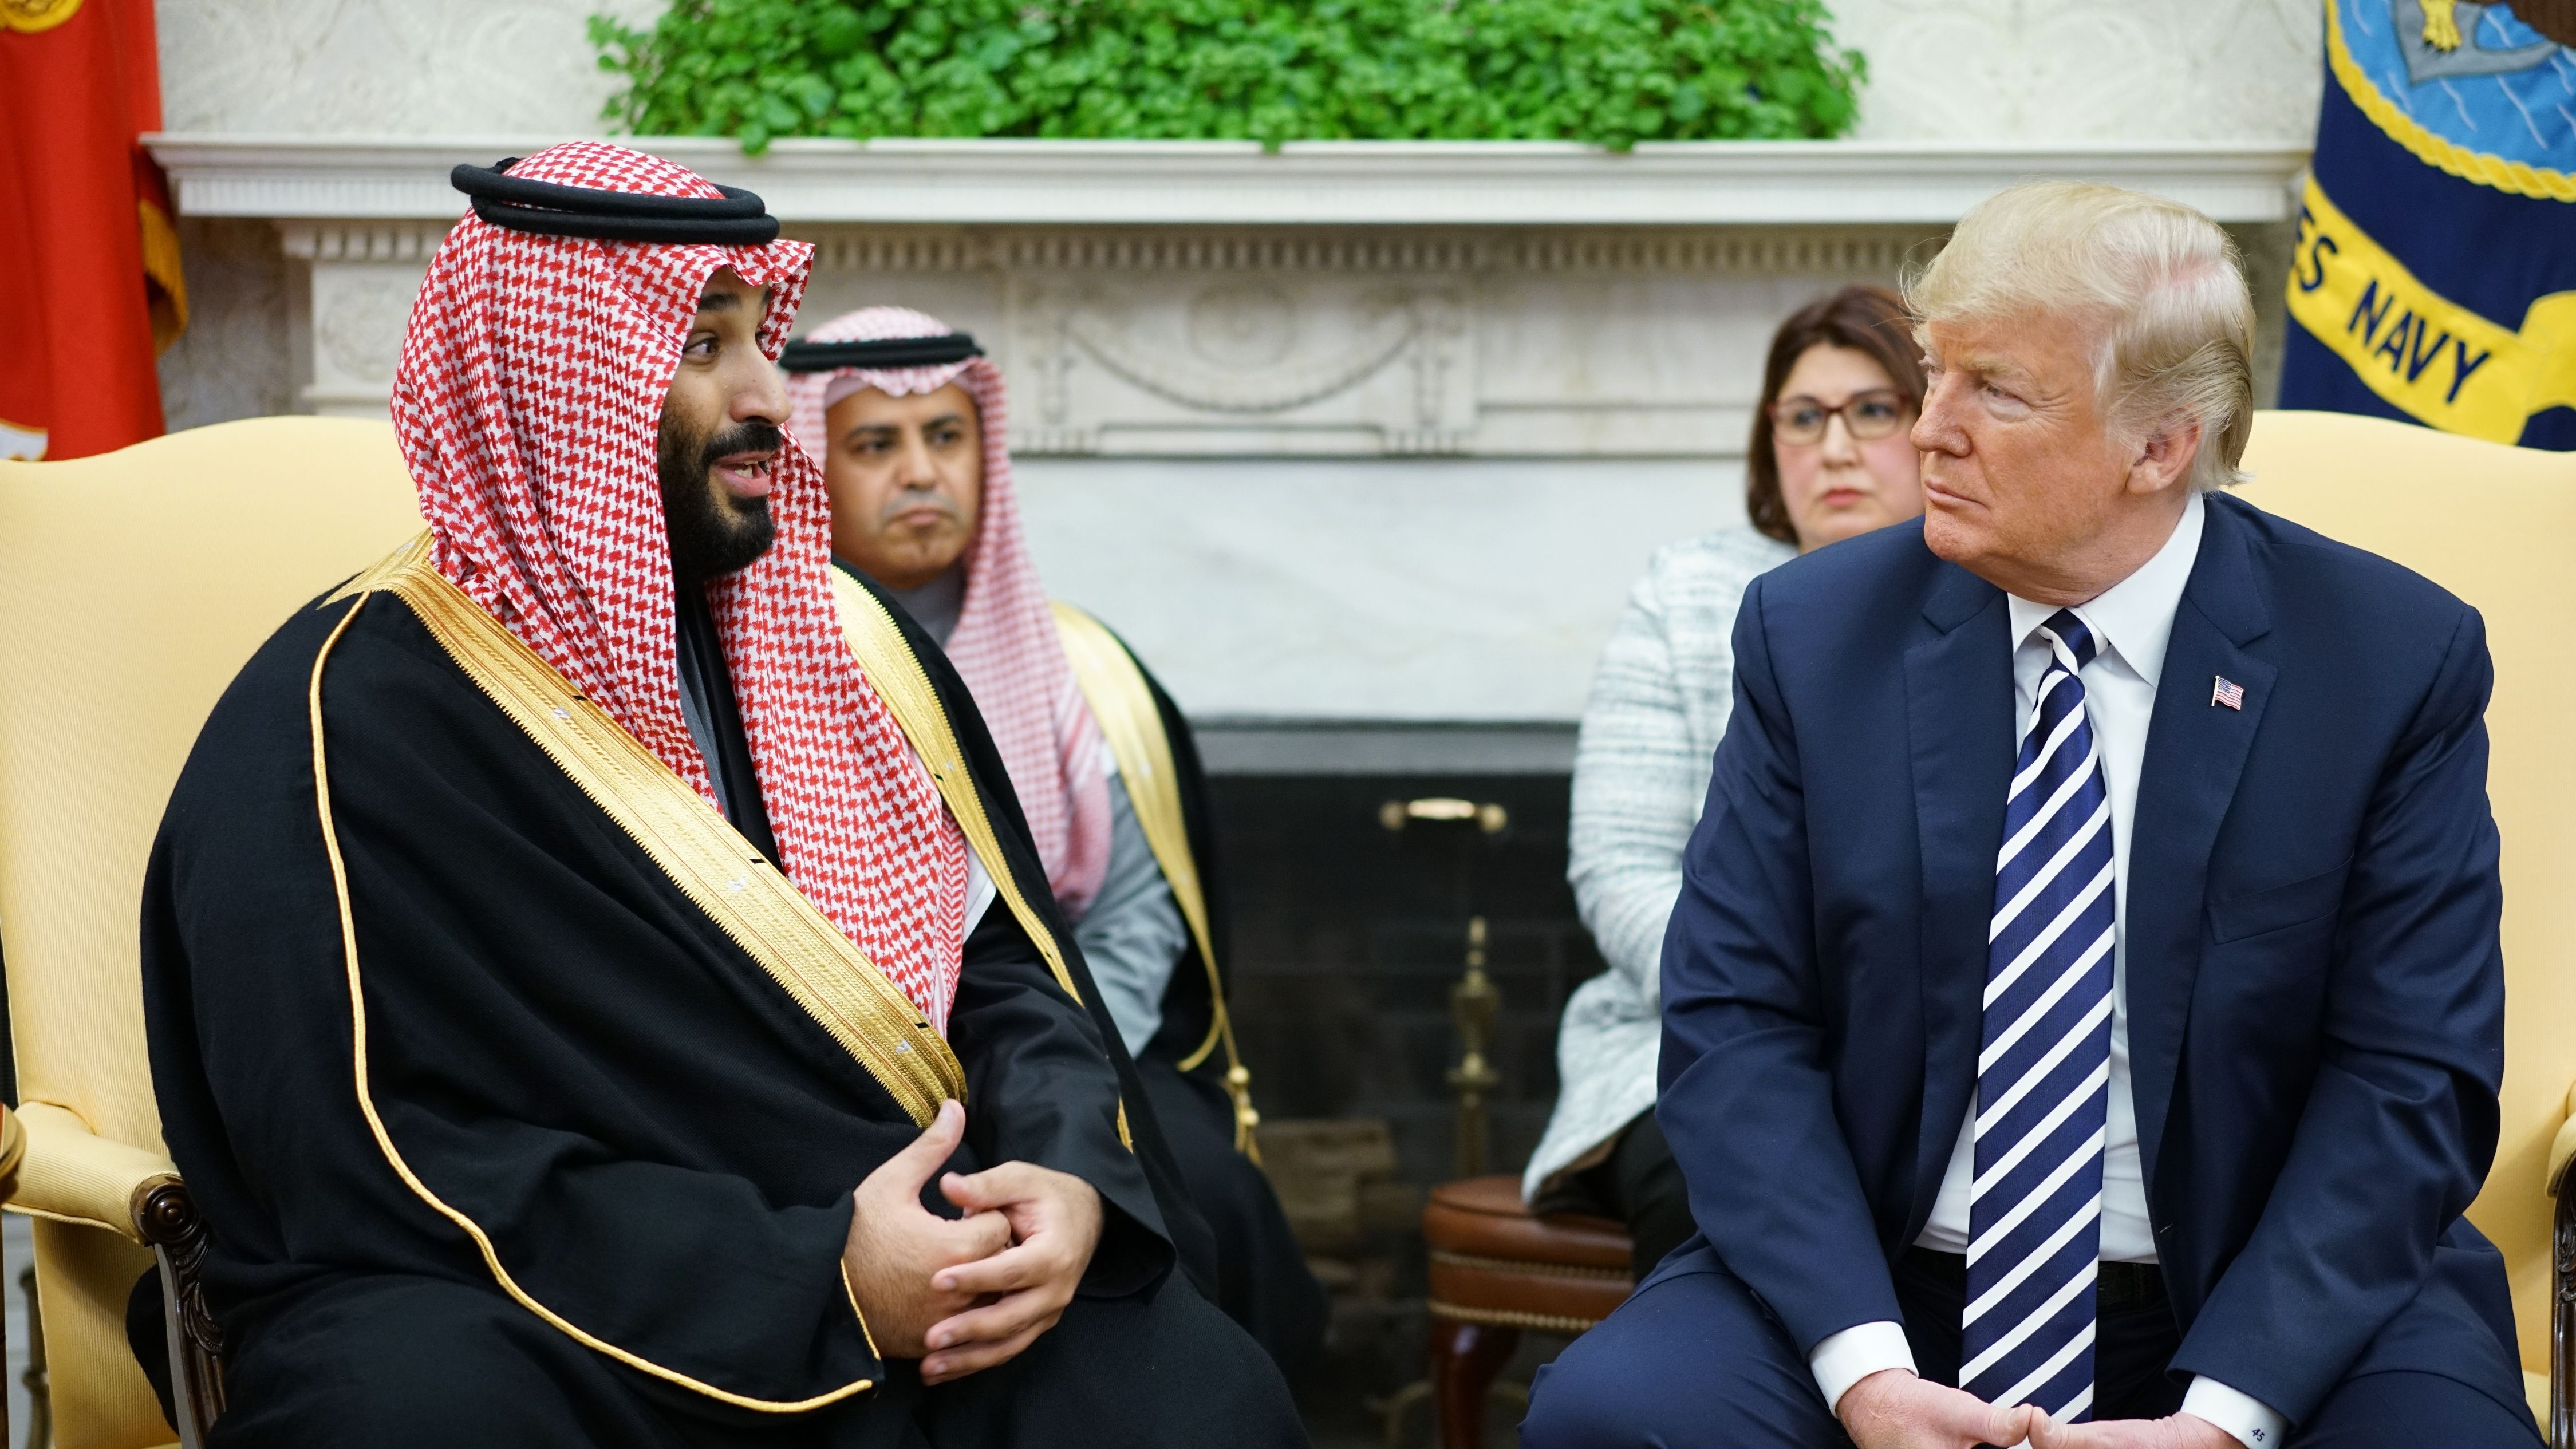 President Trump & Saudis at White House